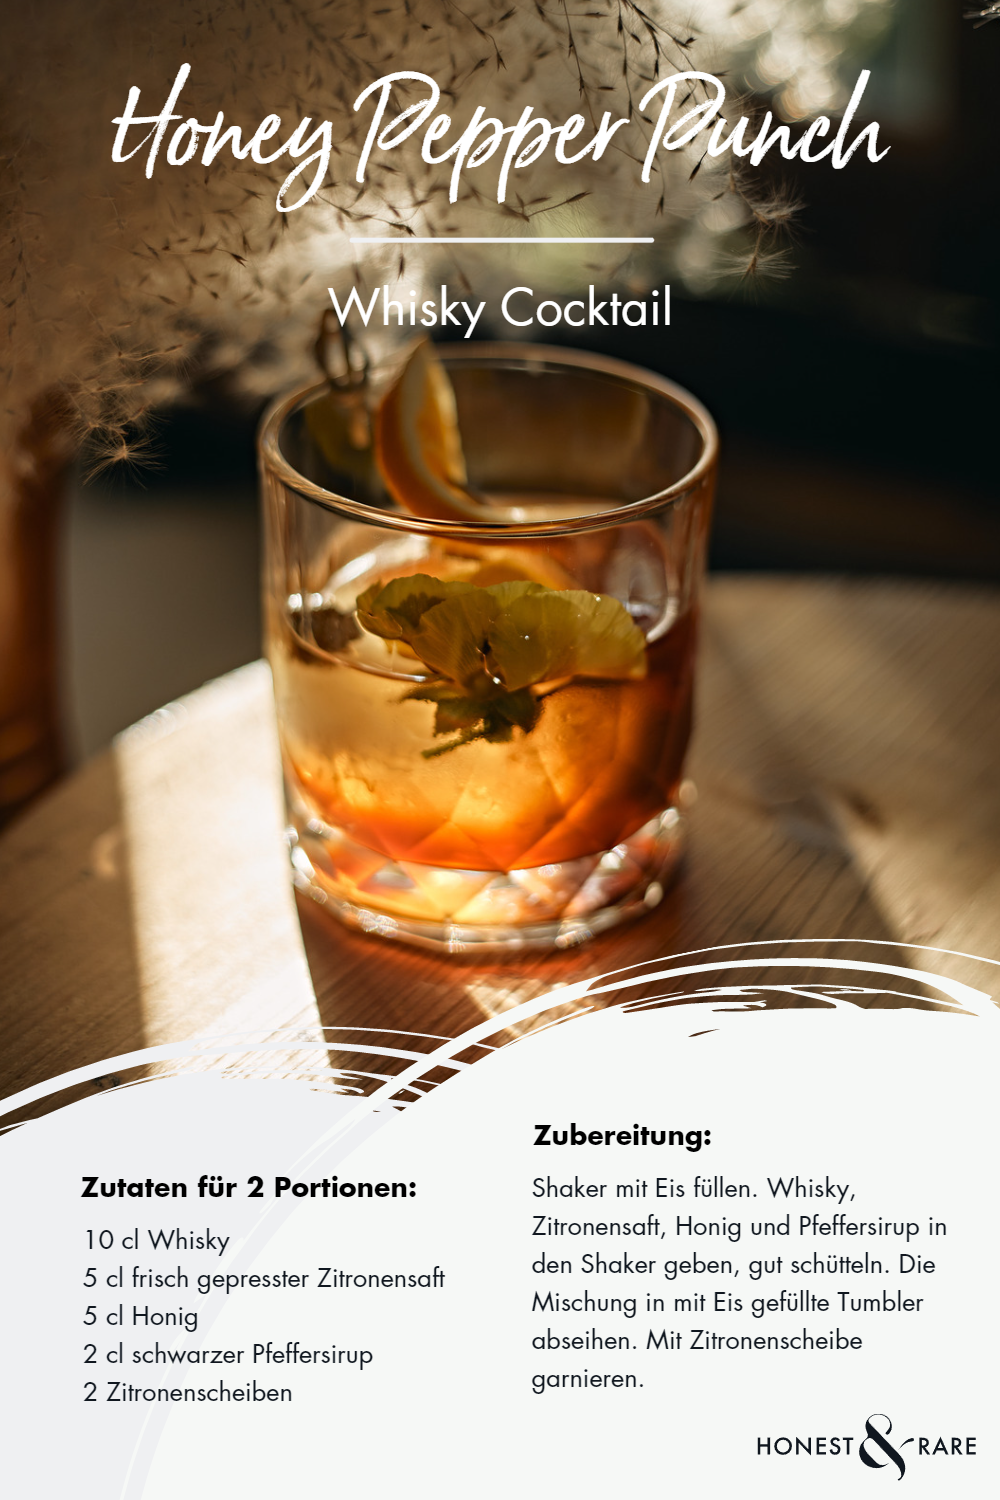 Honey Pepper Punch - das Rezept für den Whisky-Cocktail